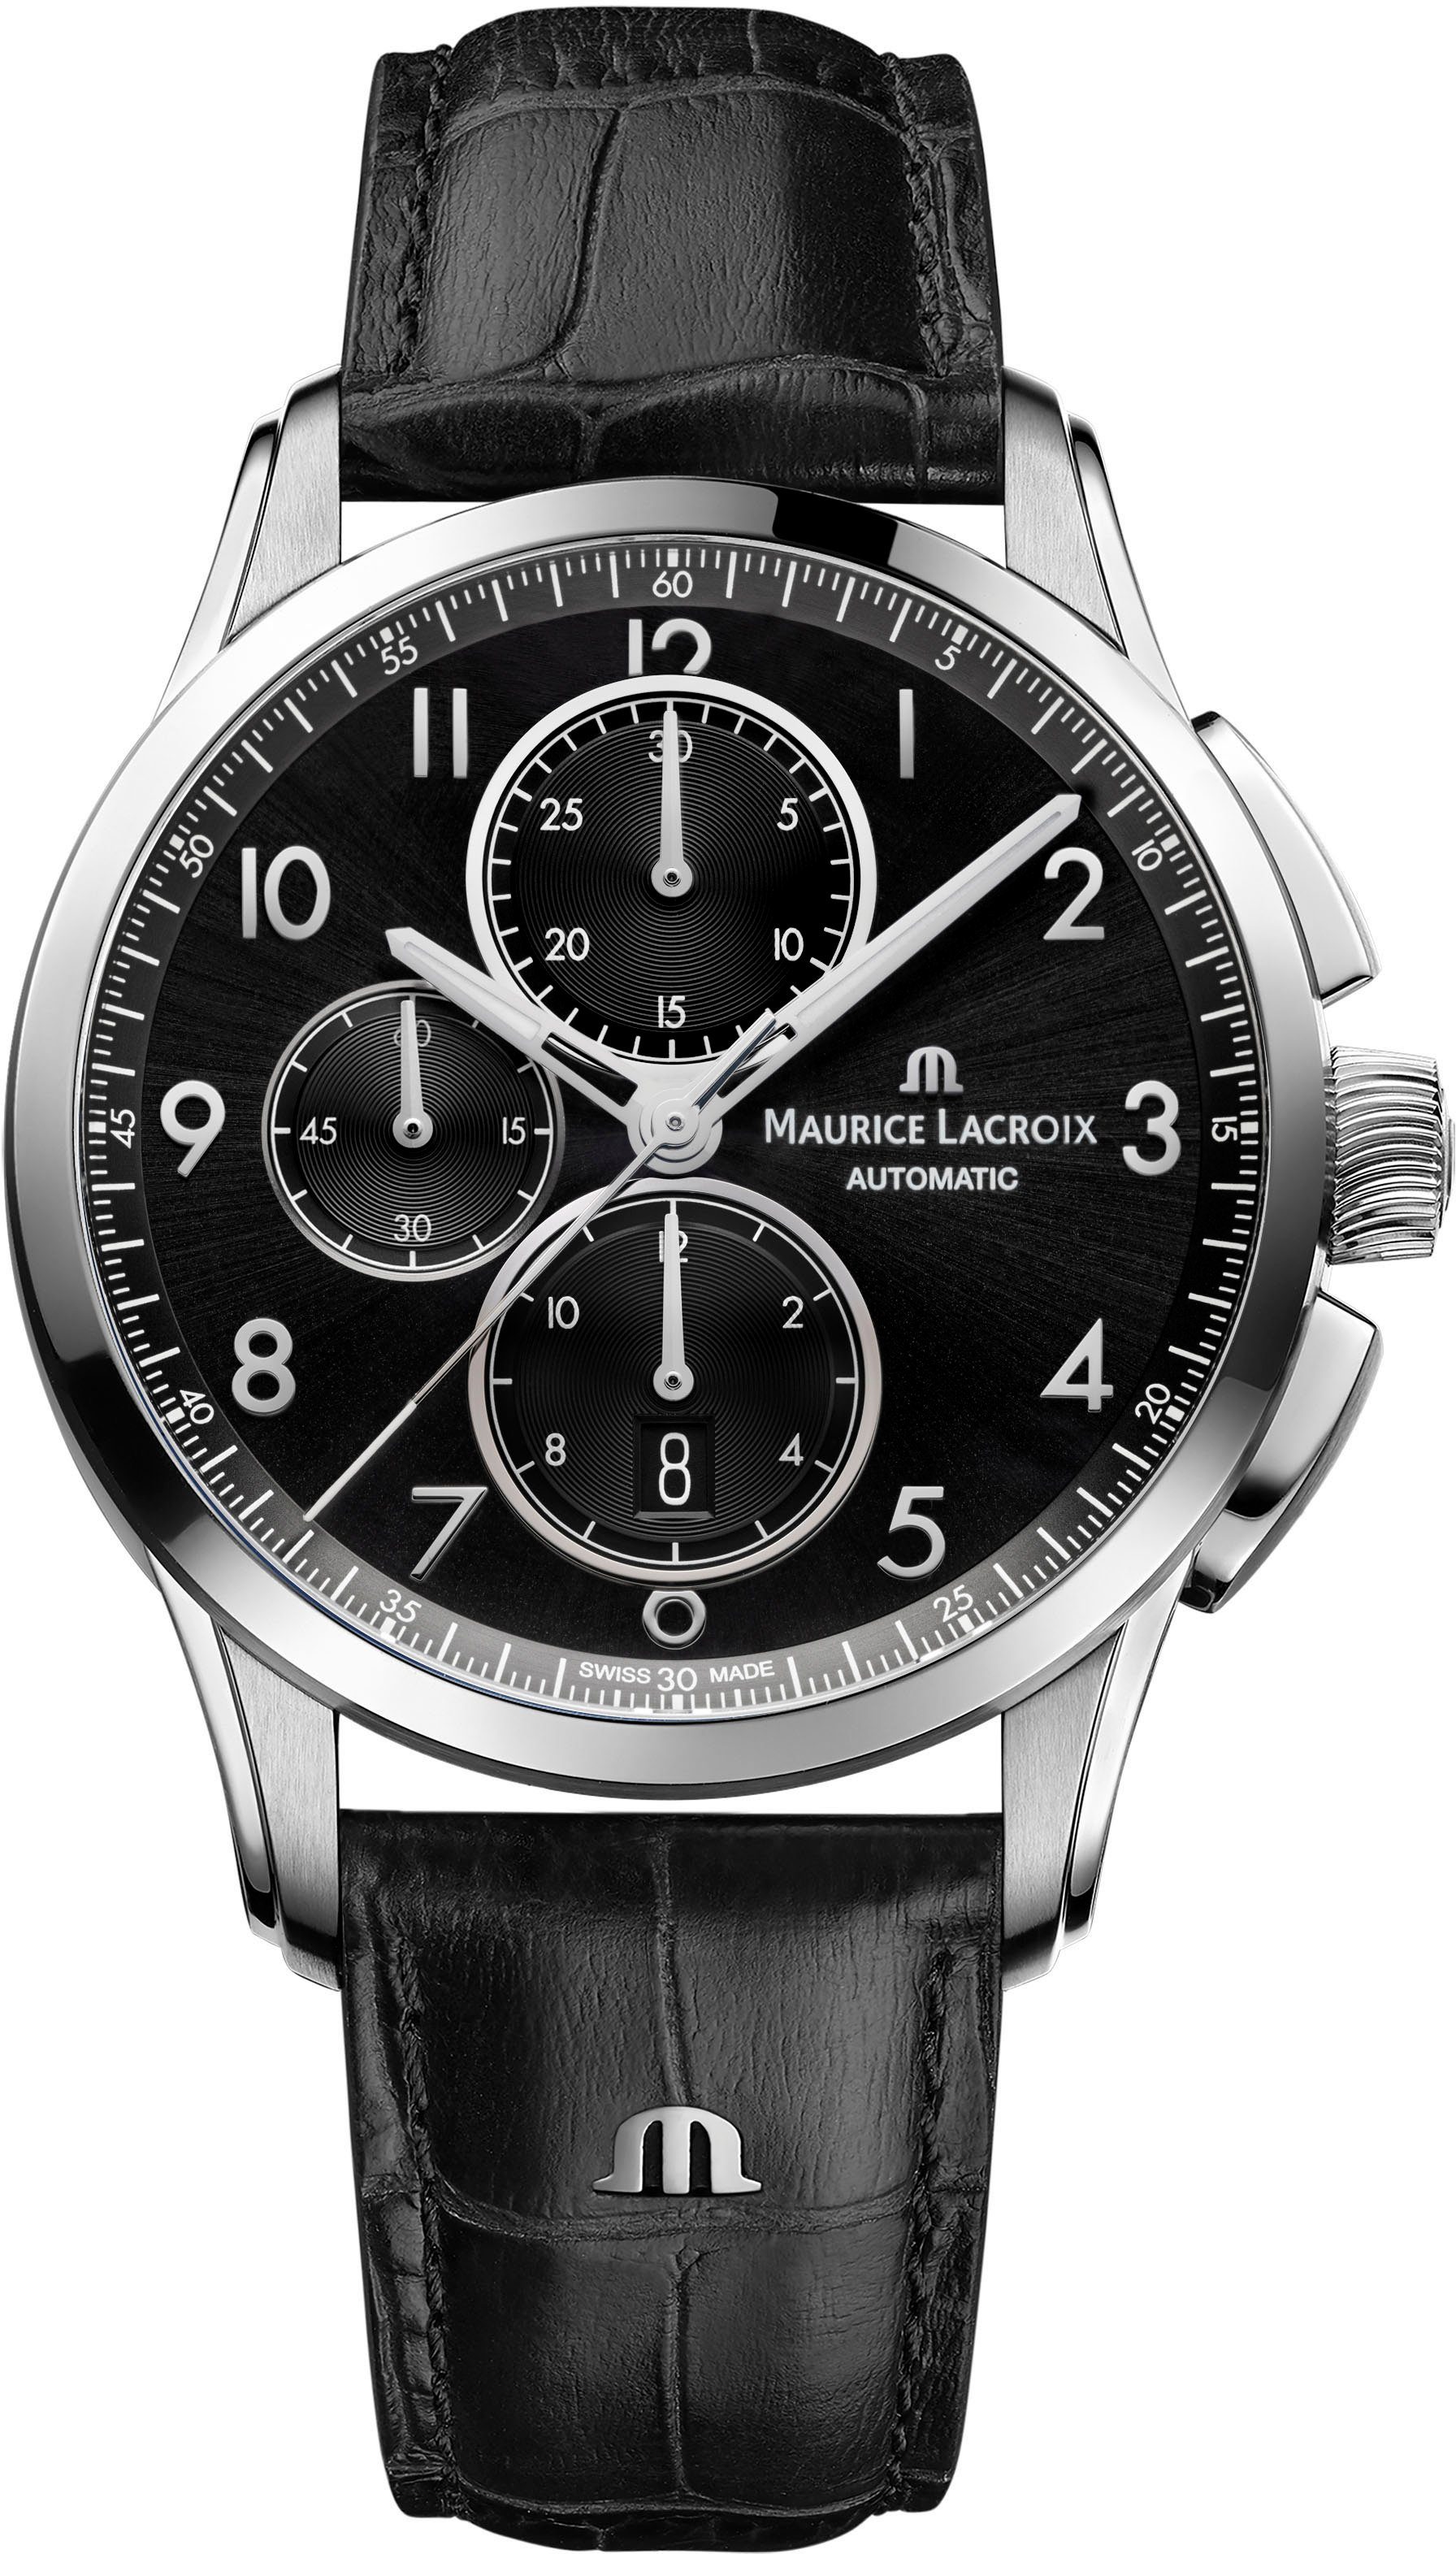 MAURICE LACROIX Chronograph Pontos Chronographe Date, PT6388-SS001-320-2, Automatik | Schweizer Uhren